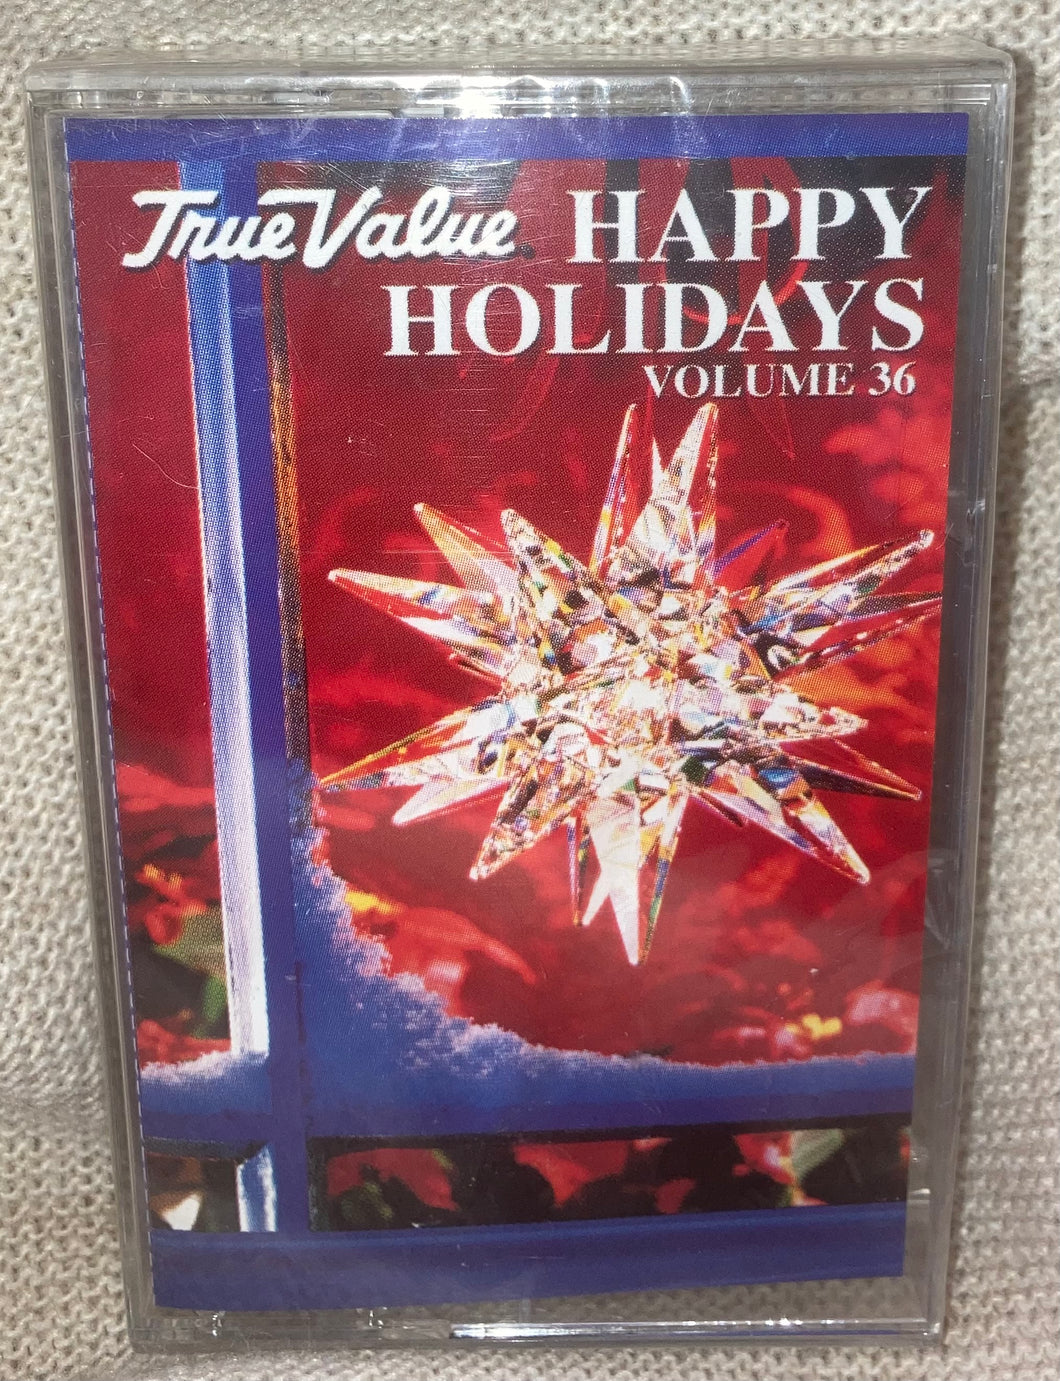 Happy Holidays Volume 36 Cassette Tape True Value Hardware Christmas Vintage 2001